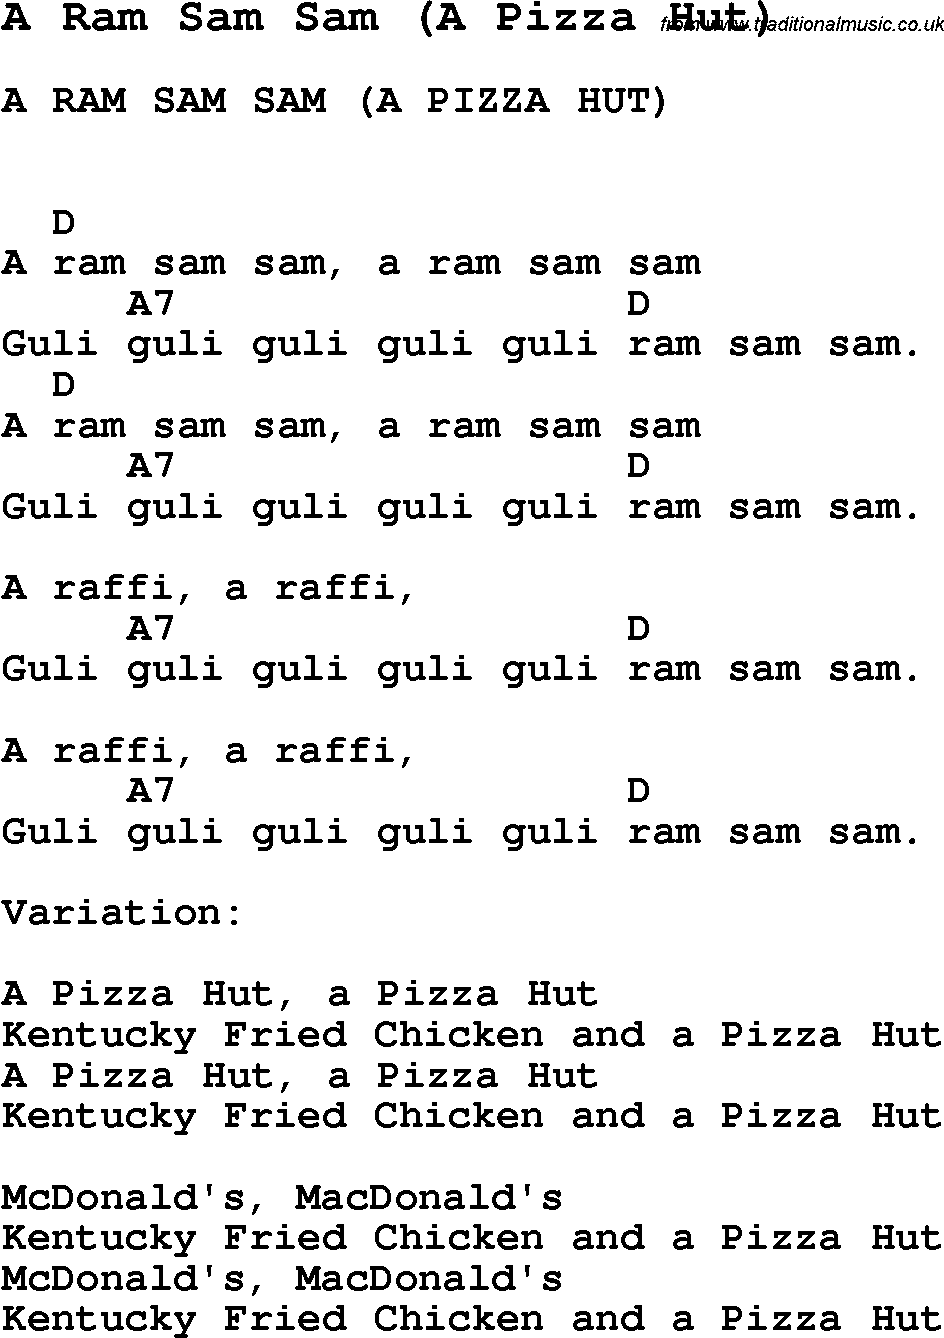 Summer-Camp Song, A Ram Sam Sam (A Pizza Hut), with lyrics and chords for Ukulele, Guitar Banjo etc.